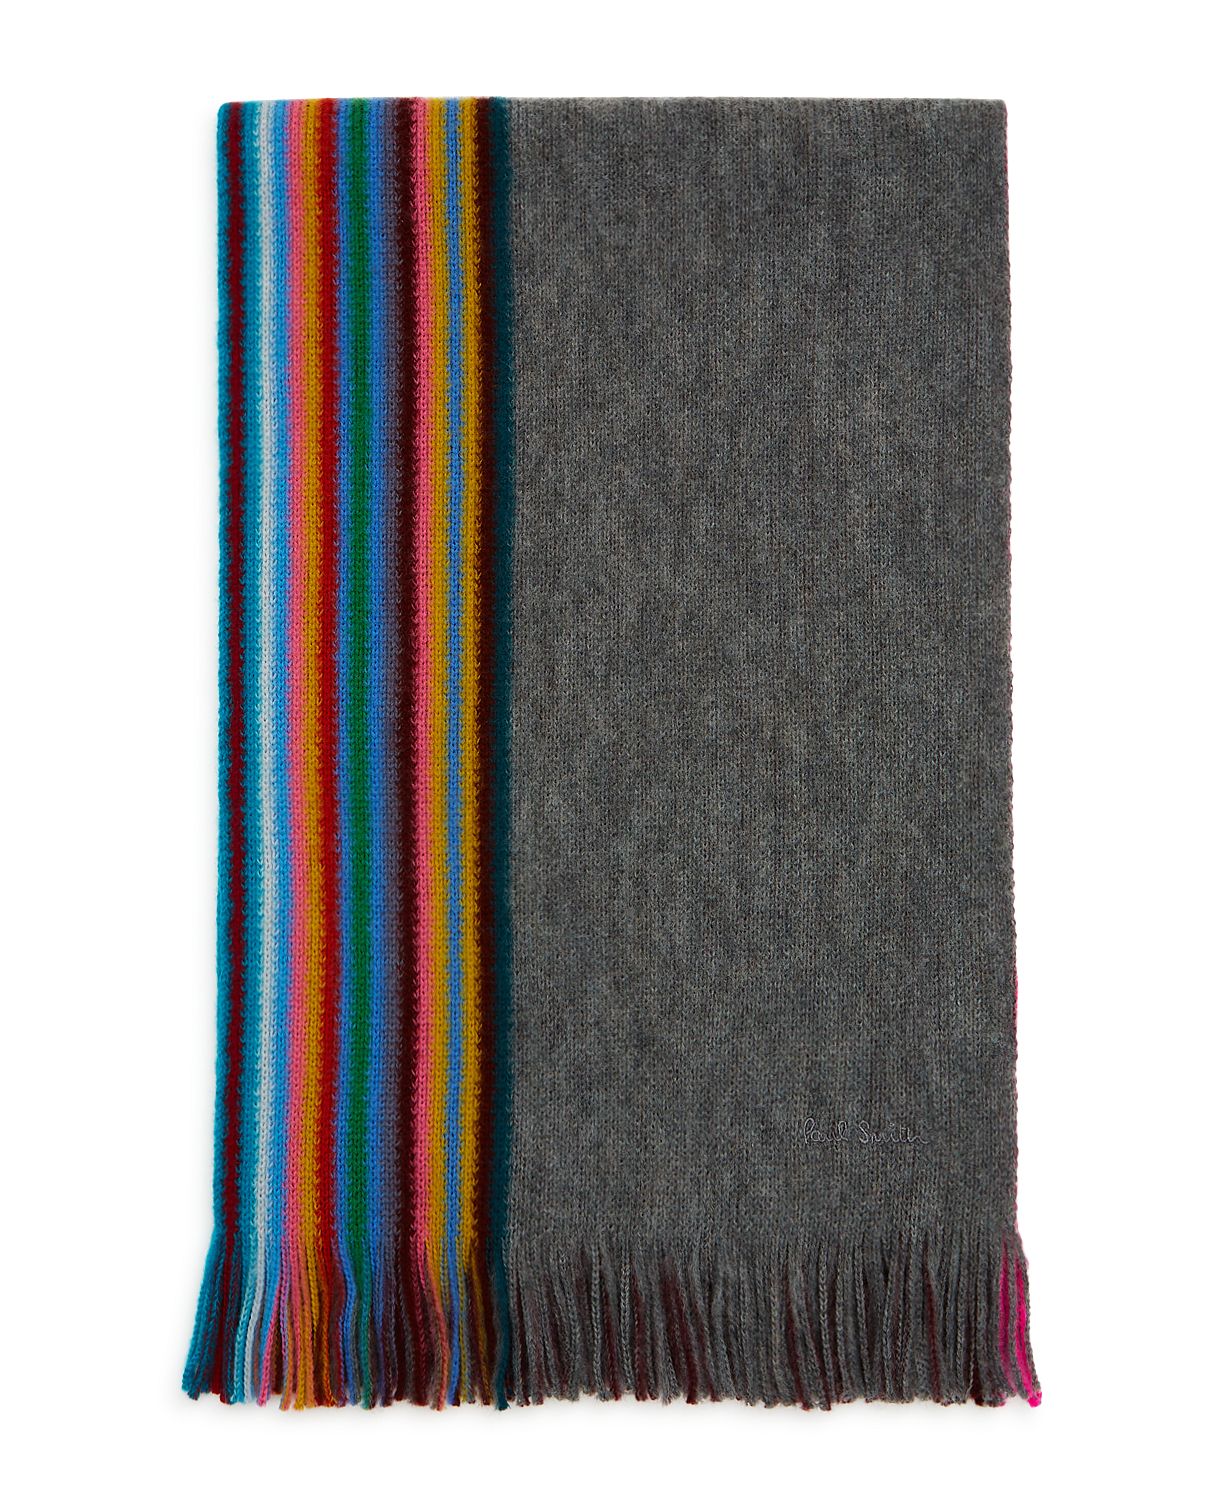 Paul Smith Multi-edge Striped Scarf Charcoal Stripe